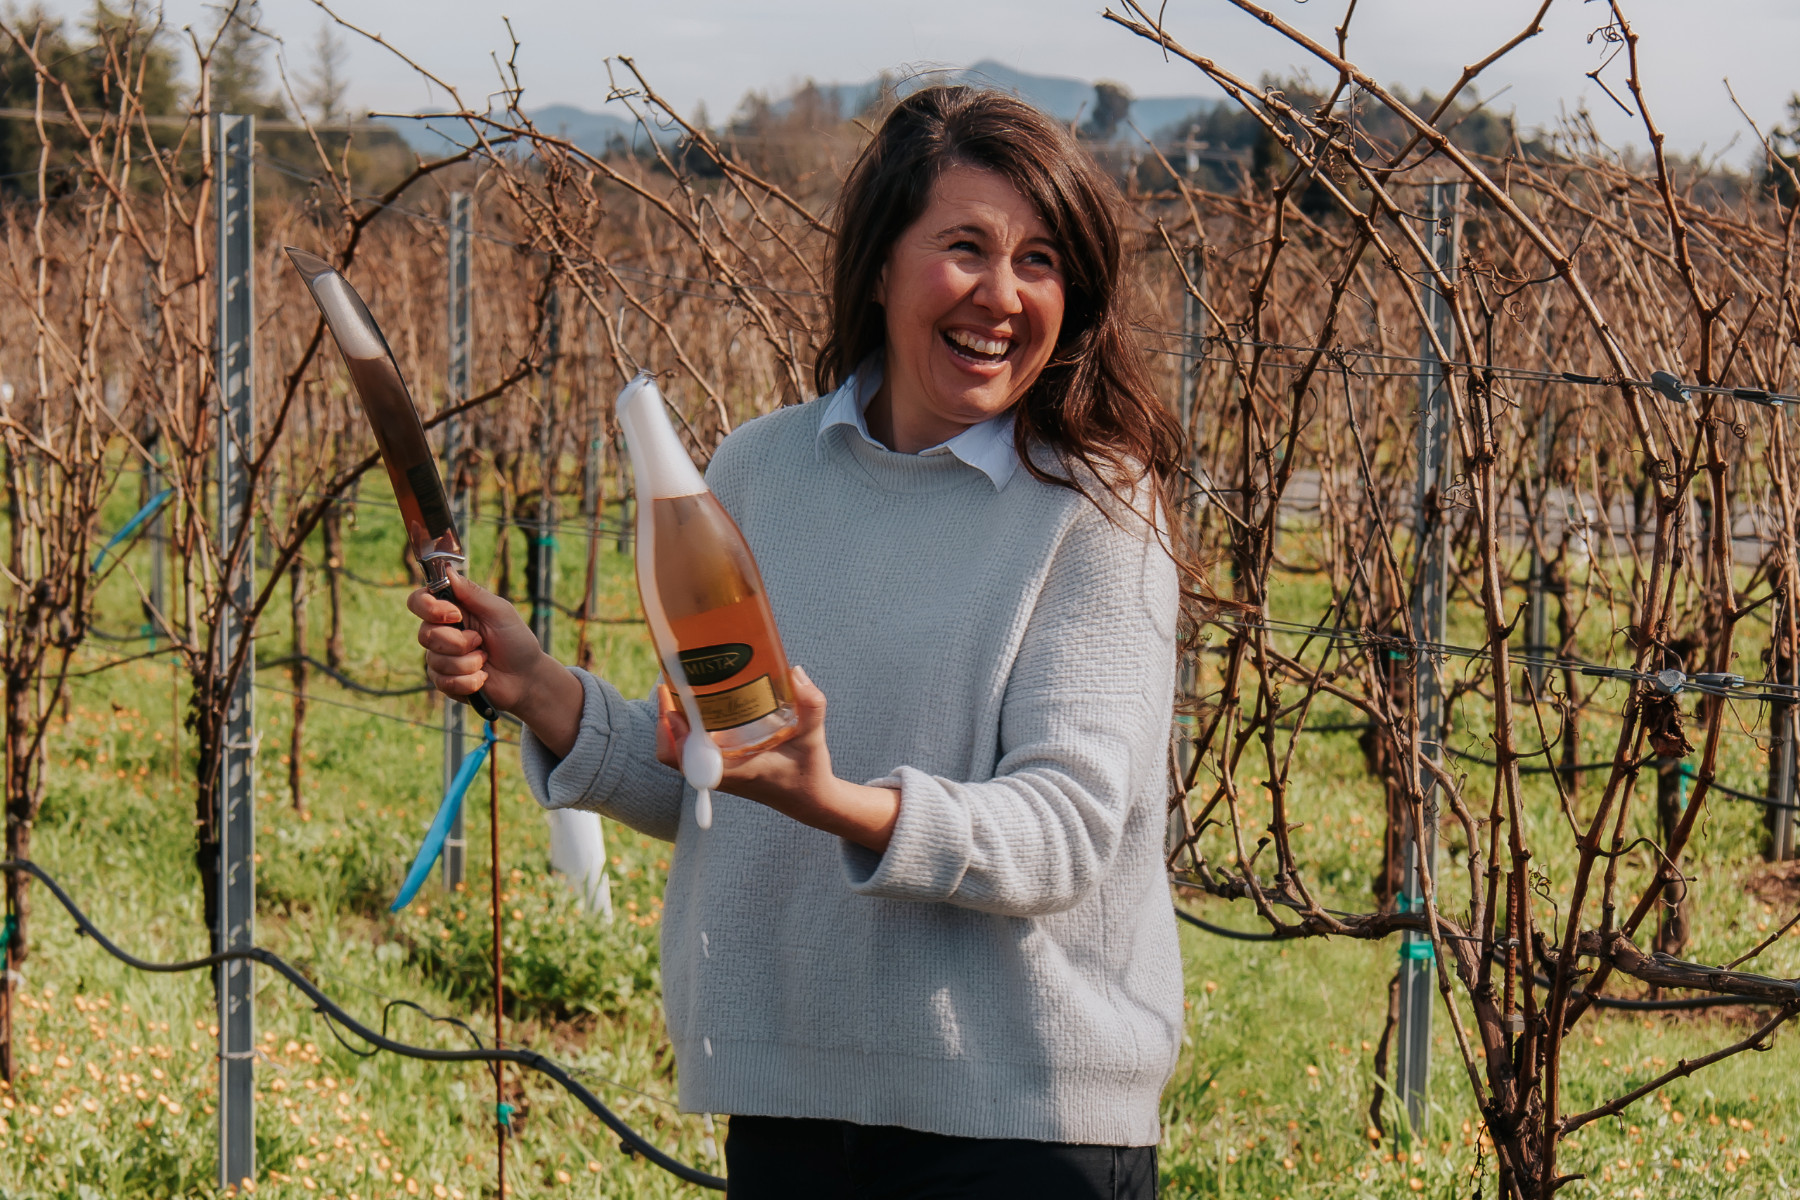 Ashley Herzberg Amista Winemaker with Bottle of Sparkling Wine in Vineyard